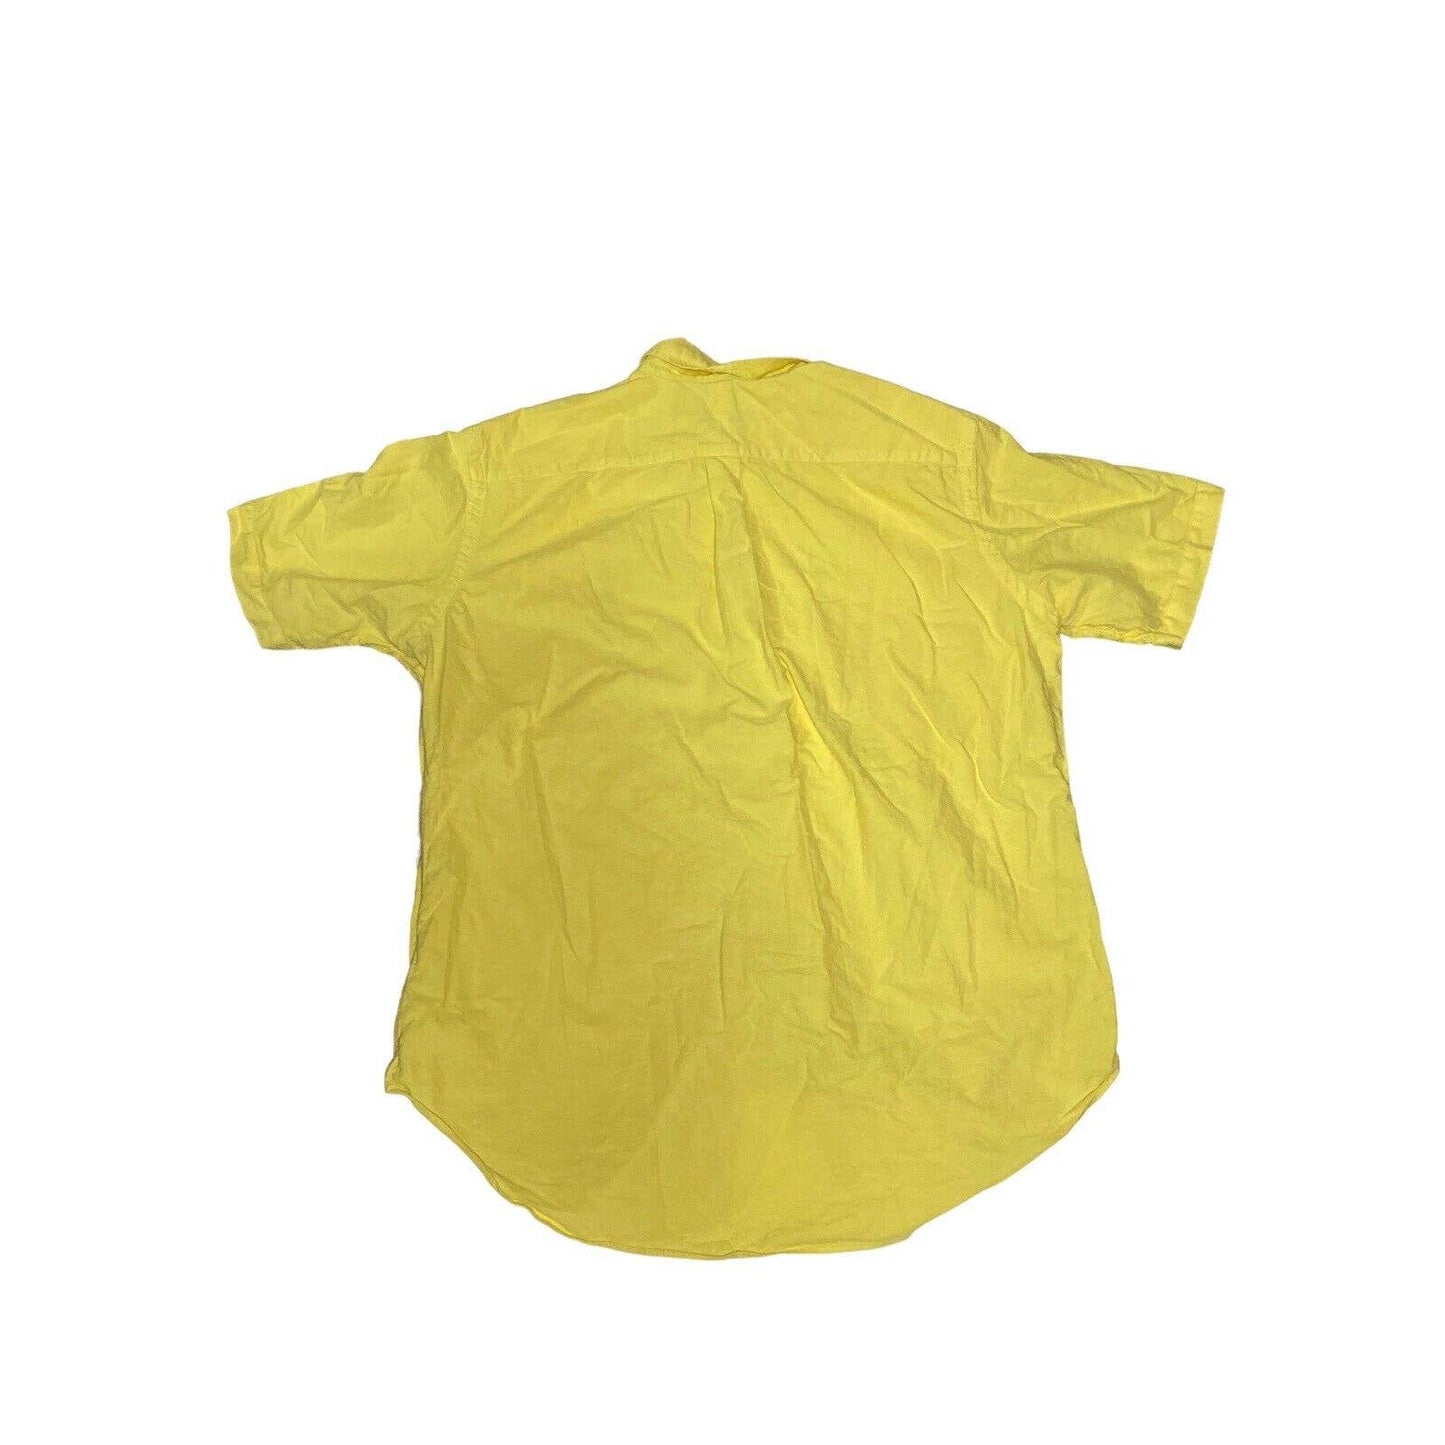 Ralph Lauren Classic Fit Short Sleeve Button Down Shirt Large Yellow 100% Cotton